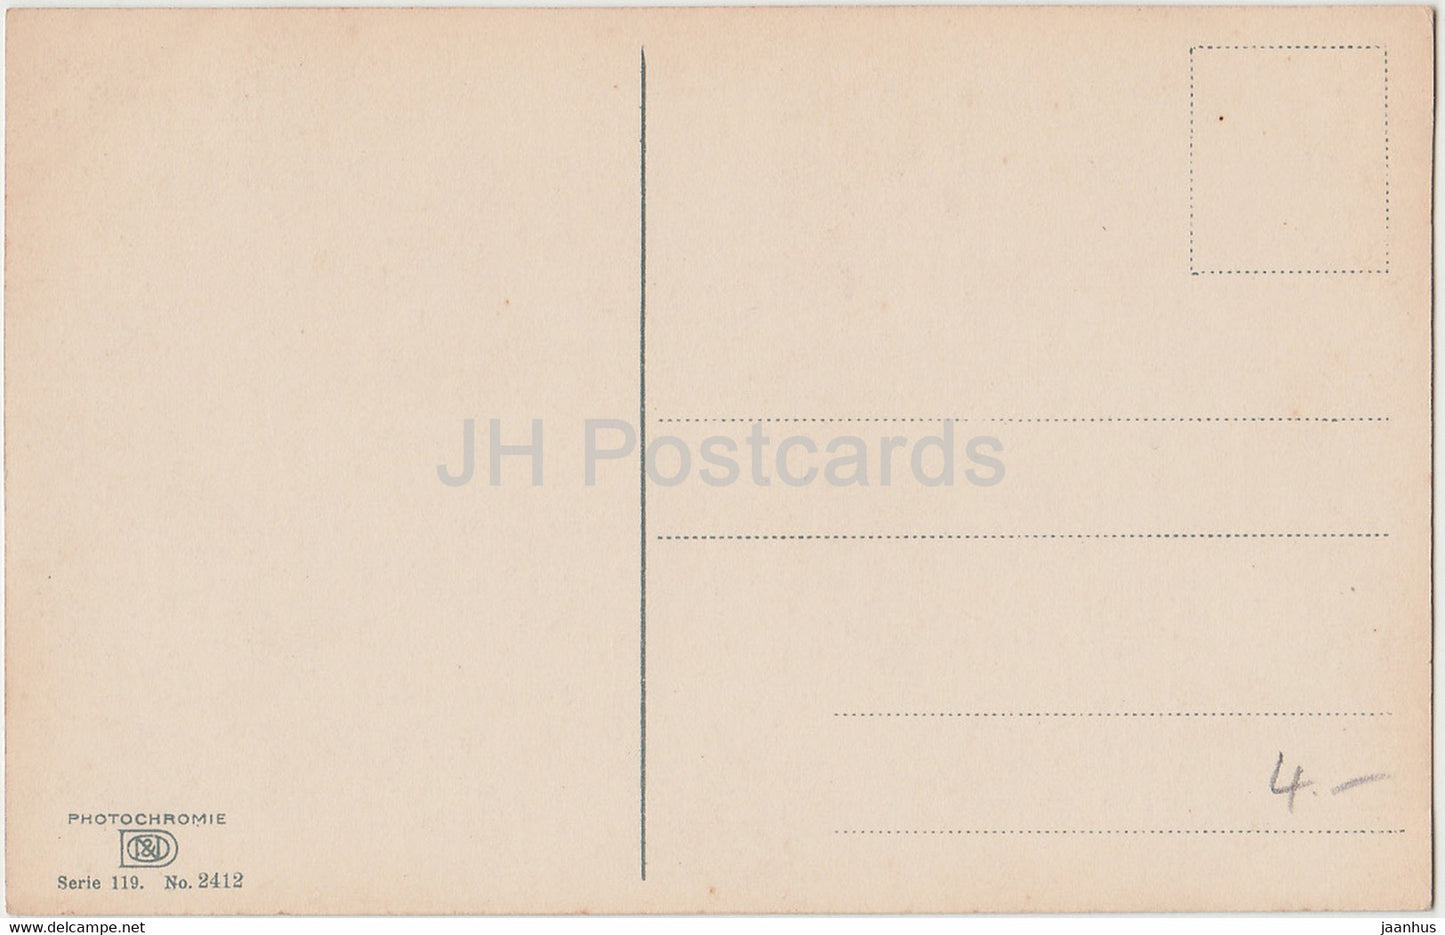 cheval - ferme - Photochromie 2412 - Série 119 - carte postale ancienne - Allemagne - inutilisée